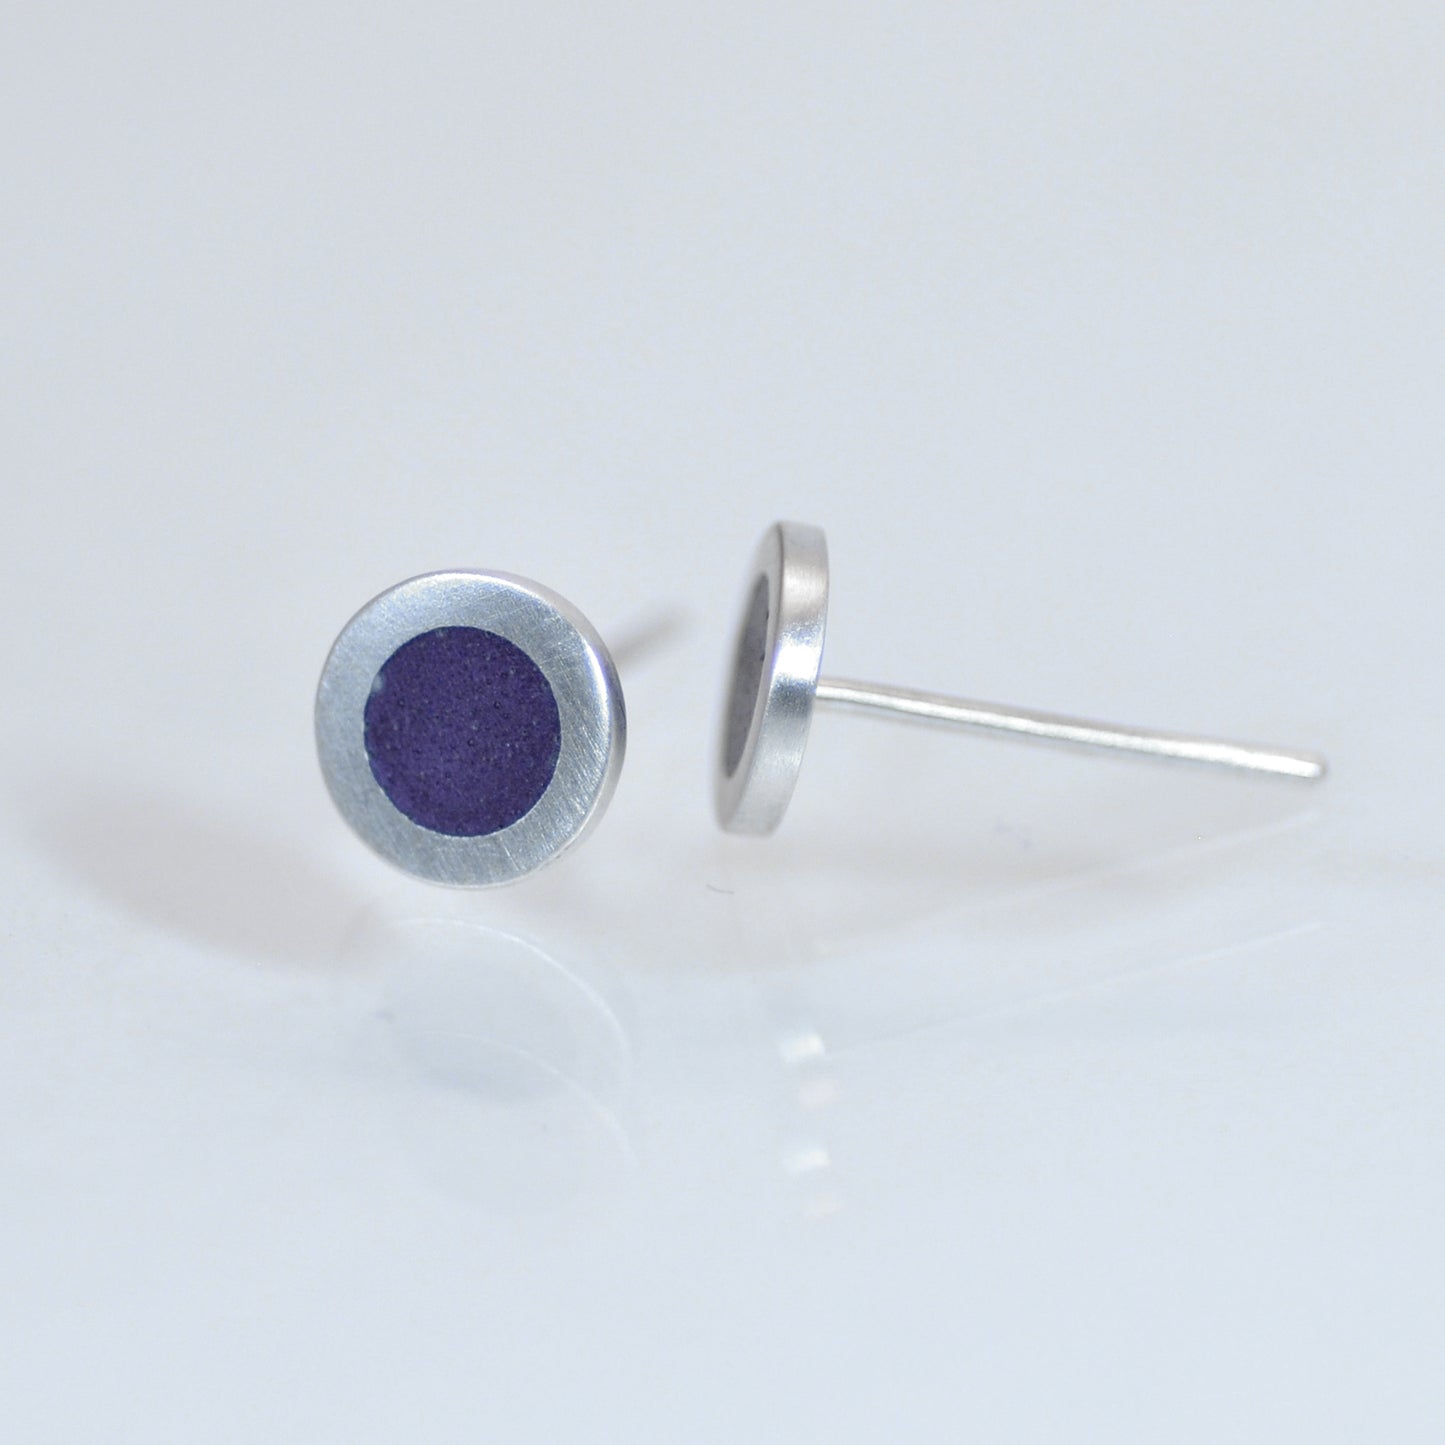 Small round silver flat ear studs, light purple